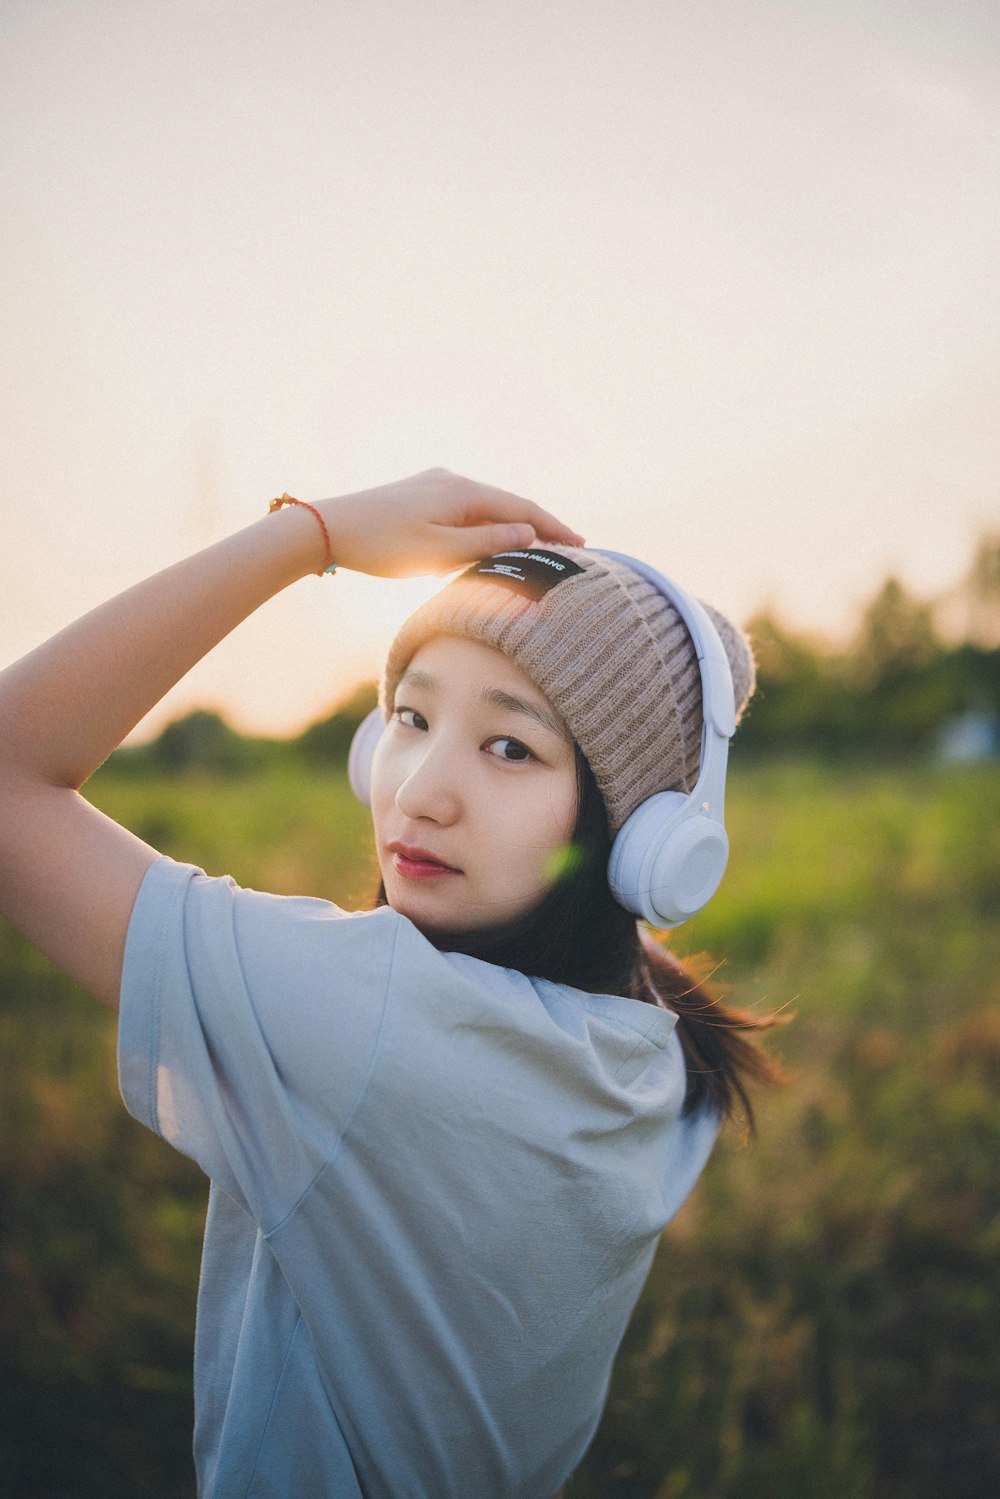 a woman wearing headphones standing in a field